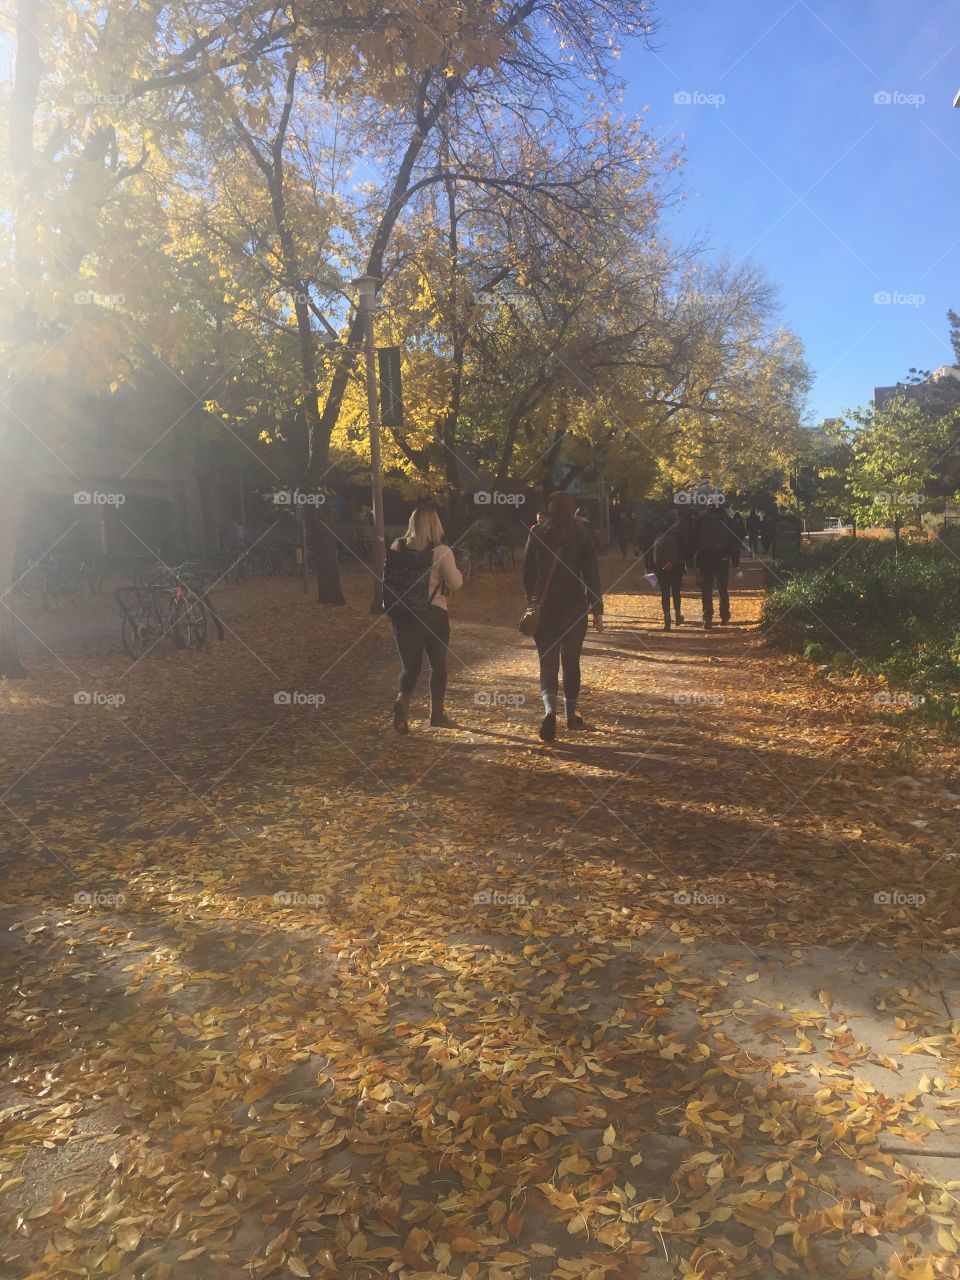 Fall walks to class